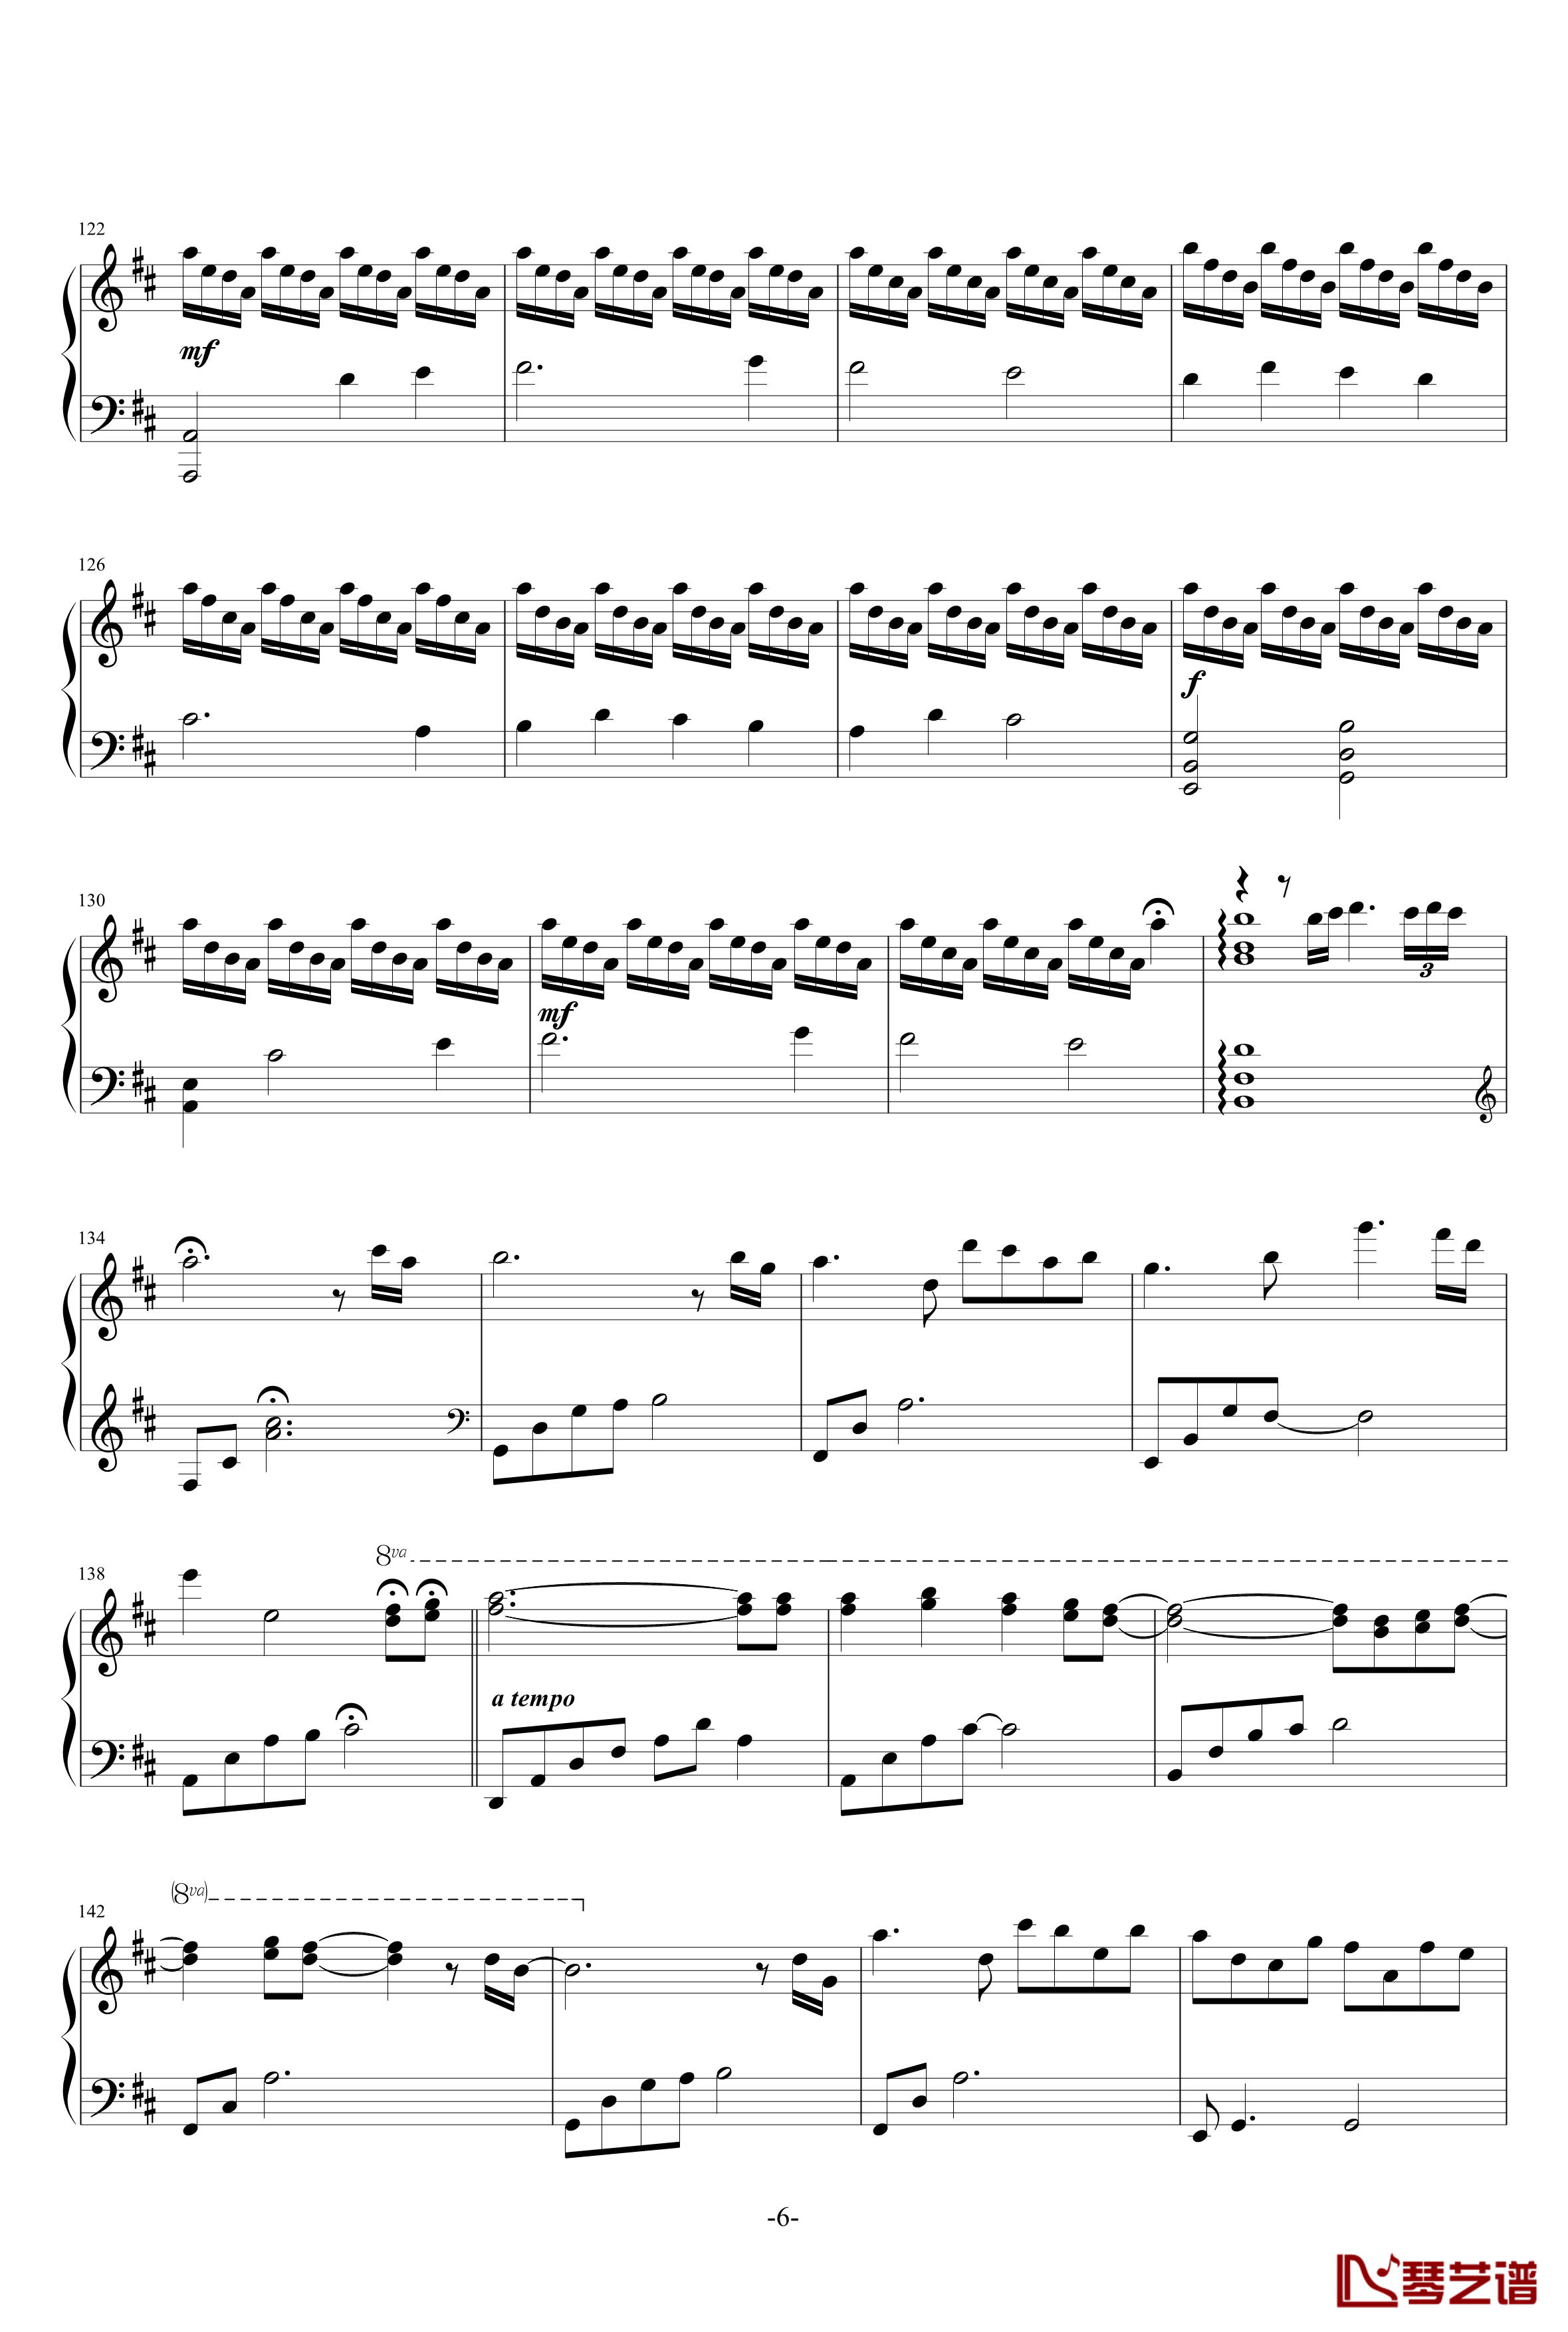 Canon In D Major 钢琴谱-唯美D大调卡农-DavidLanz6